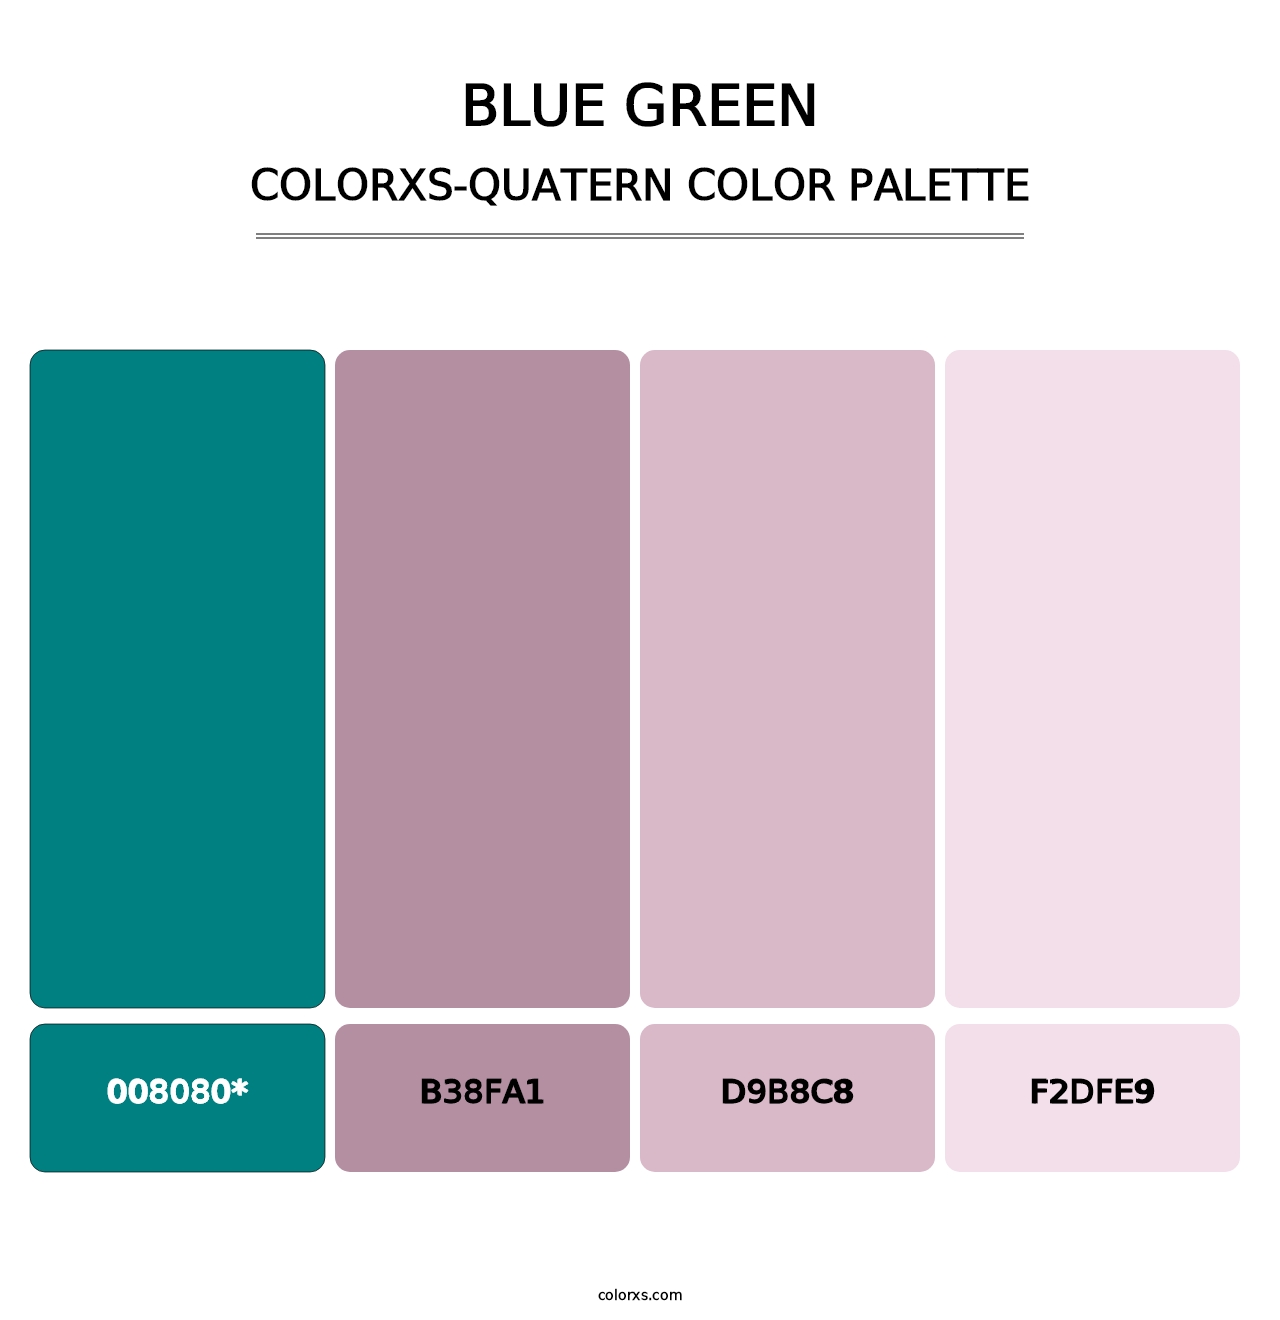 Blue Green - Colorxs Quatern Palette